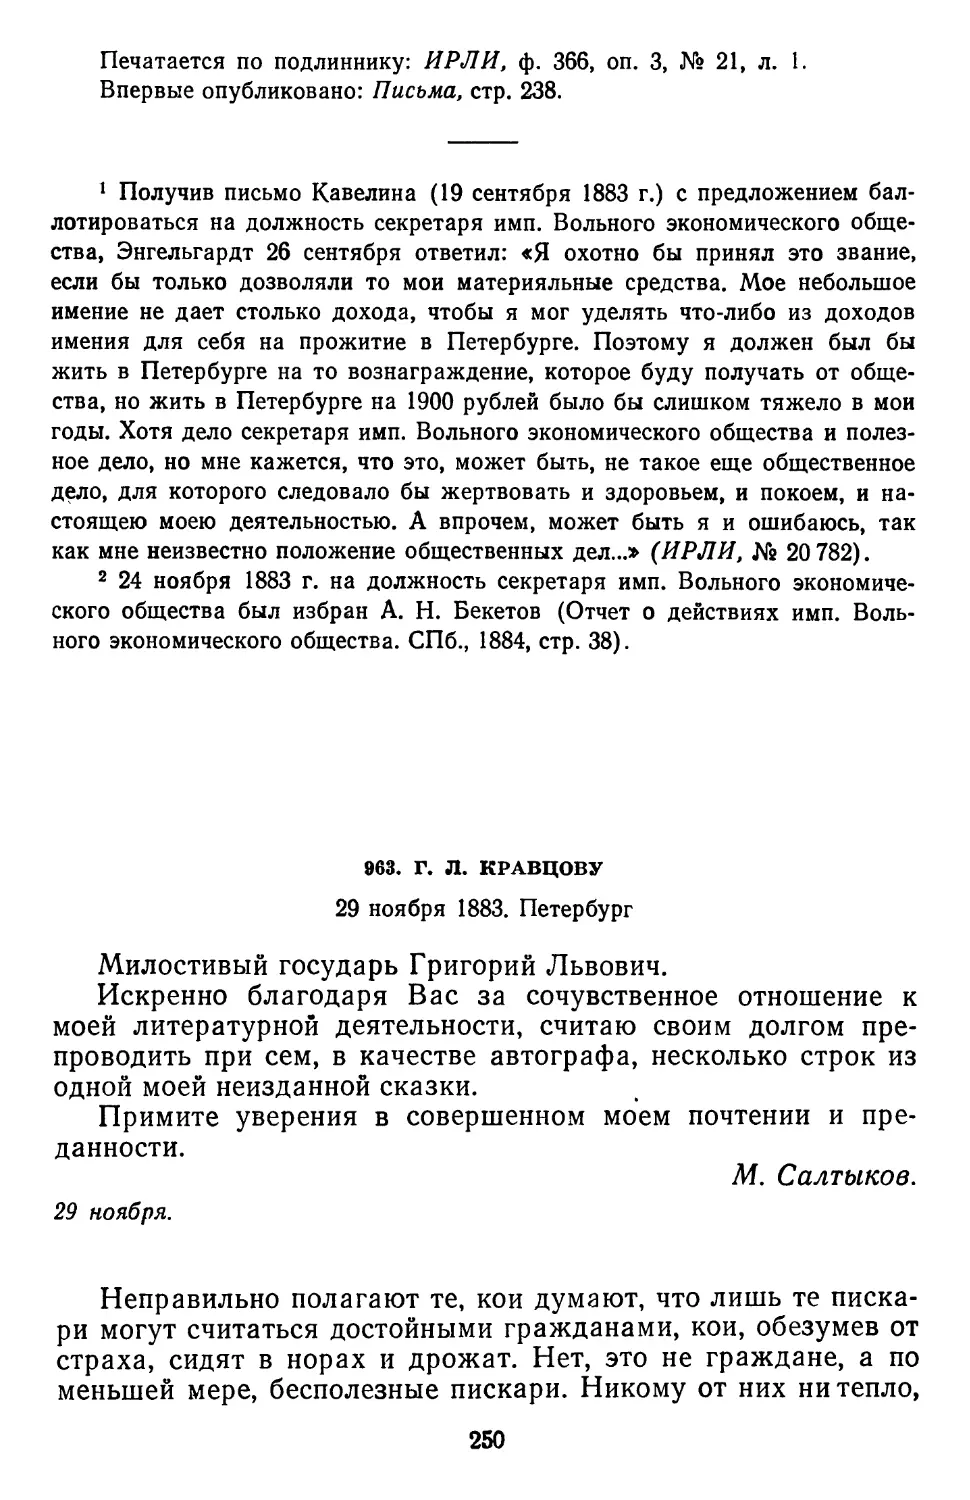 963.Г. Л. Кравцову. 29 ноября 1883.Петербург